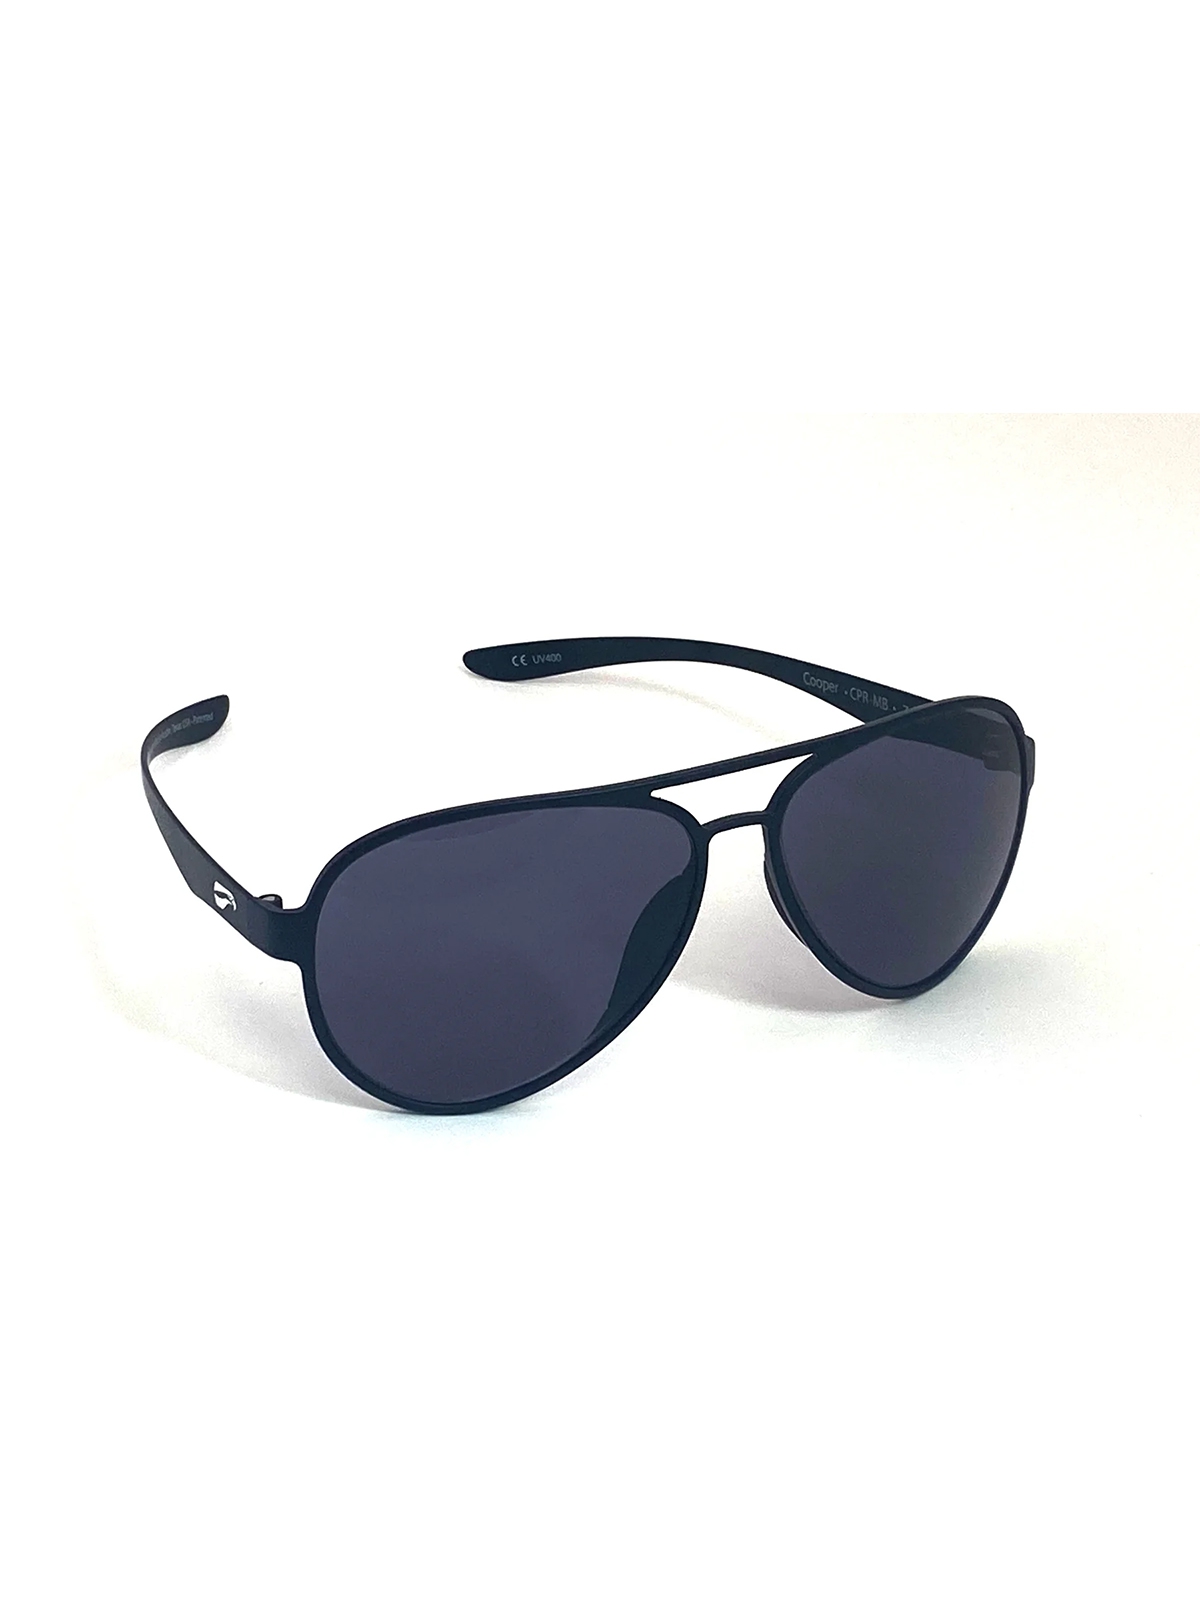 Flying Eyes Sonnenbrille Cooper Aviator - Rahmen matt schwarz, Linsen grau (dunkel)